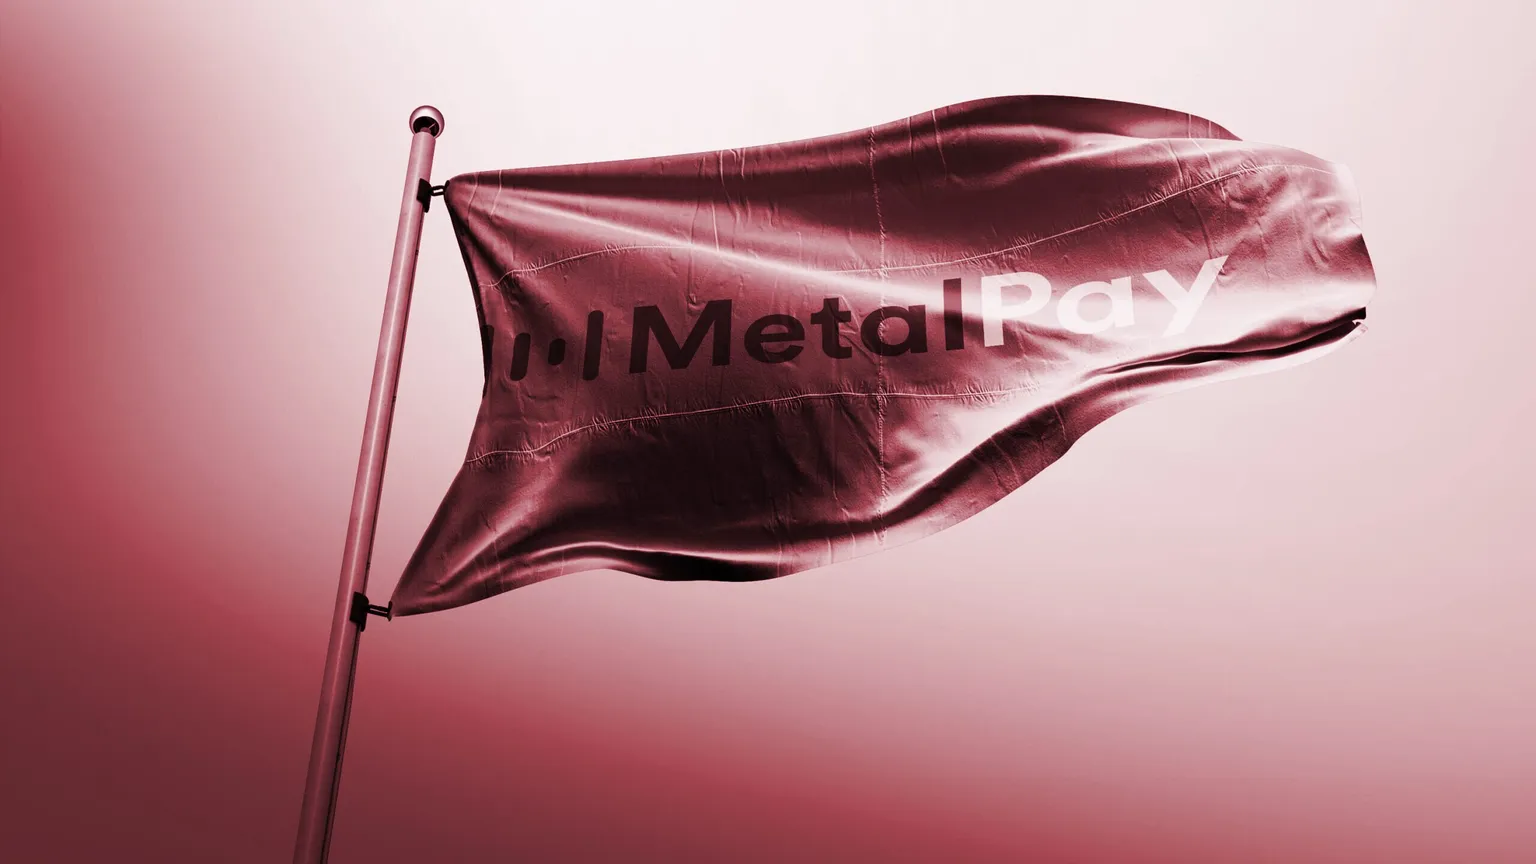 Metal Pay ha solicitado una carta bancaria federal. Imagen: Shutterstock